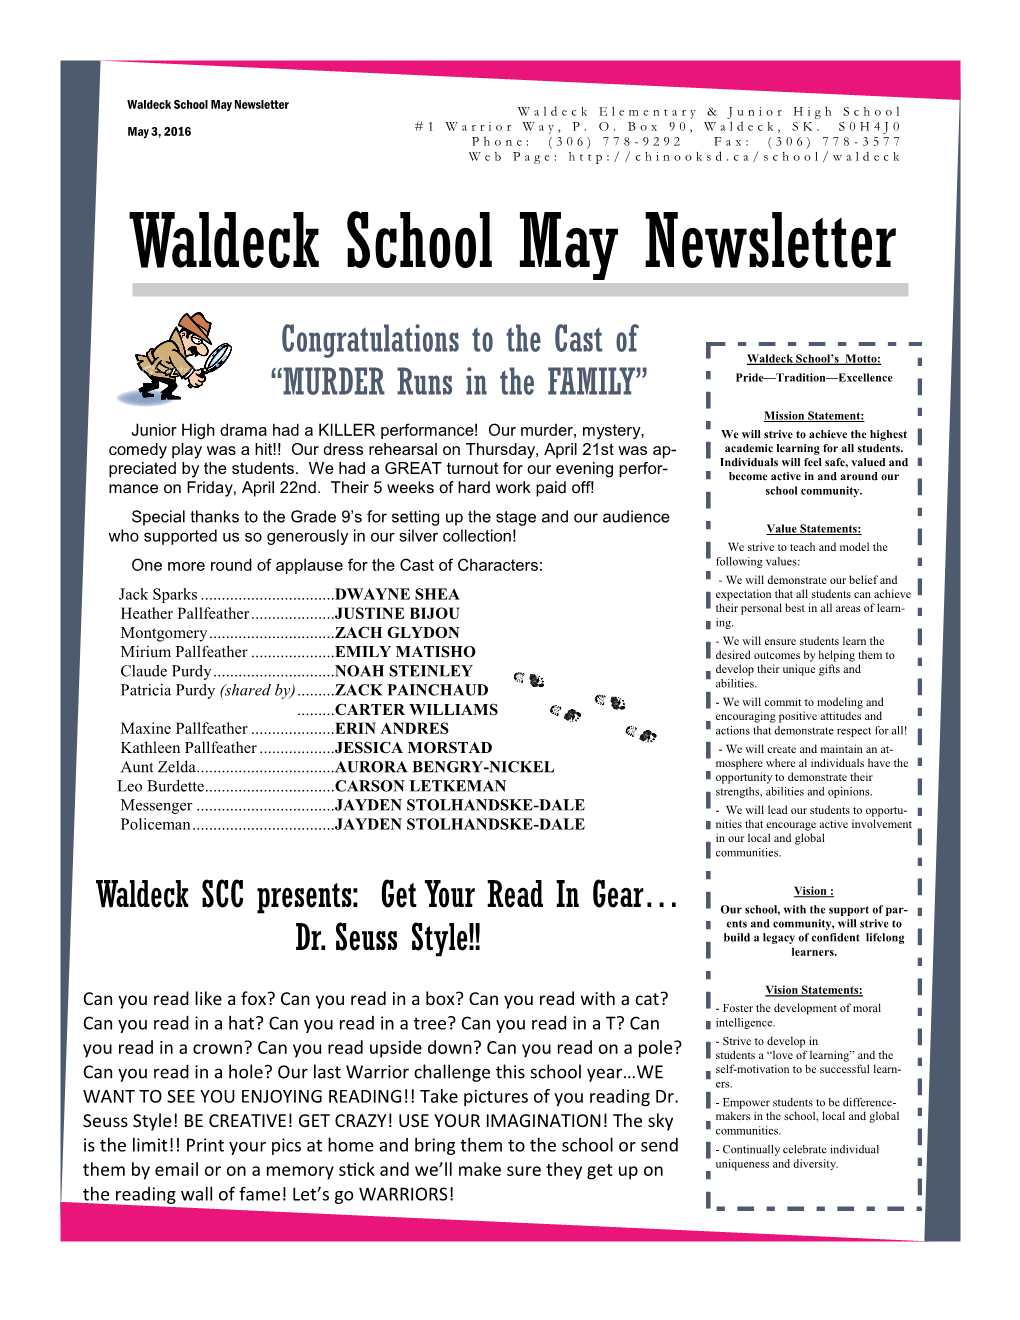 Waldeck School May Newsletter Waldeck Elementary & Junior High School May 3, 2016 #1 Warrior Way, P